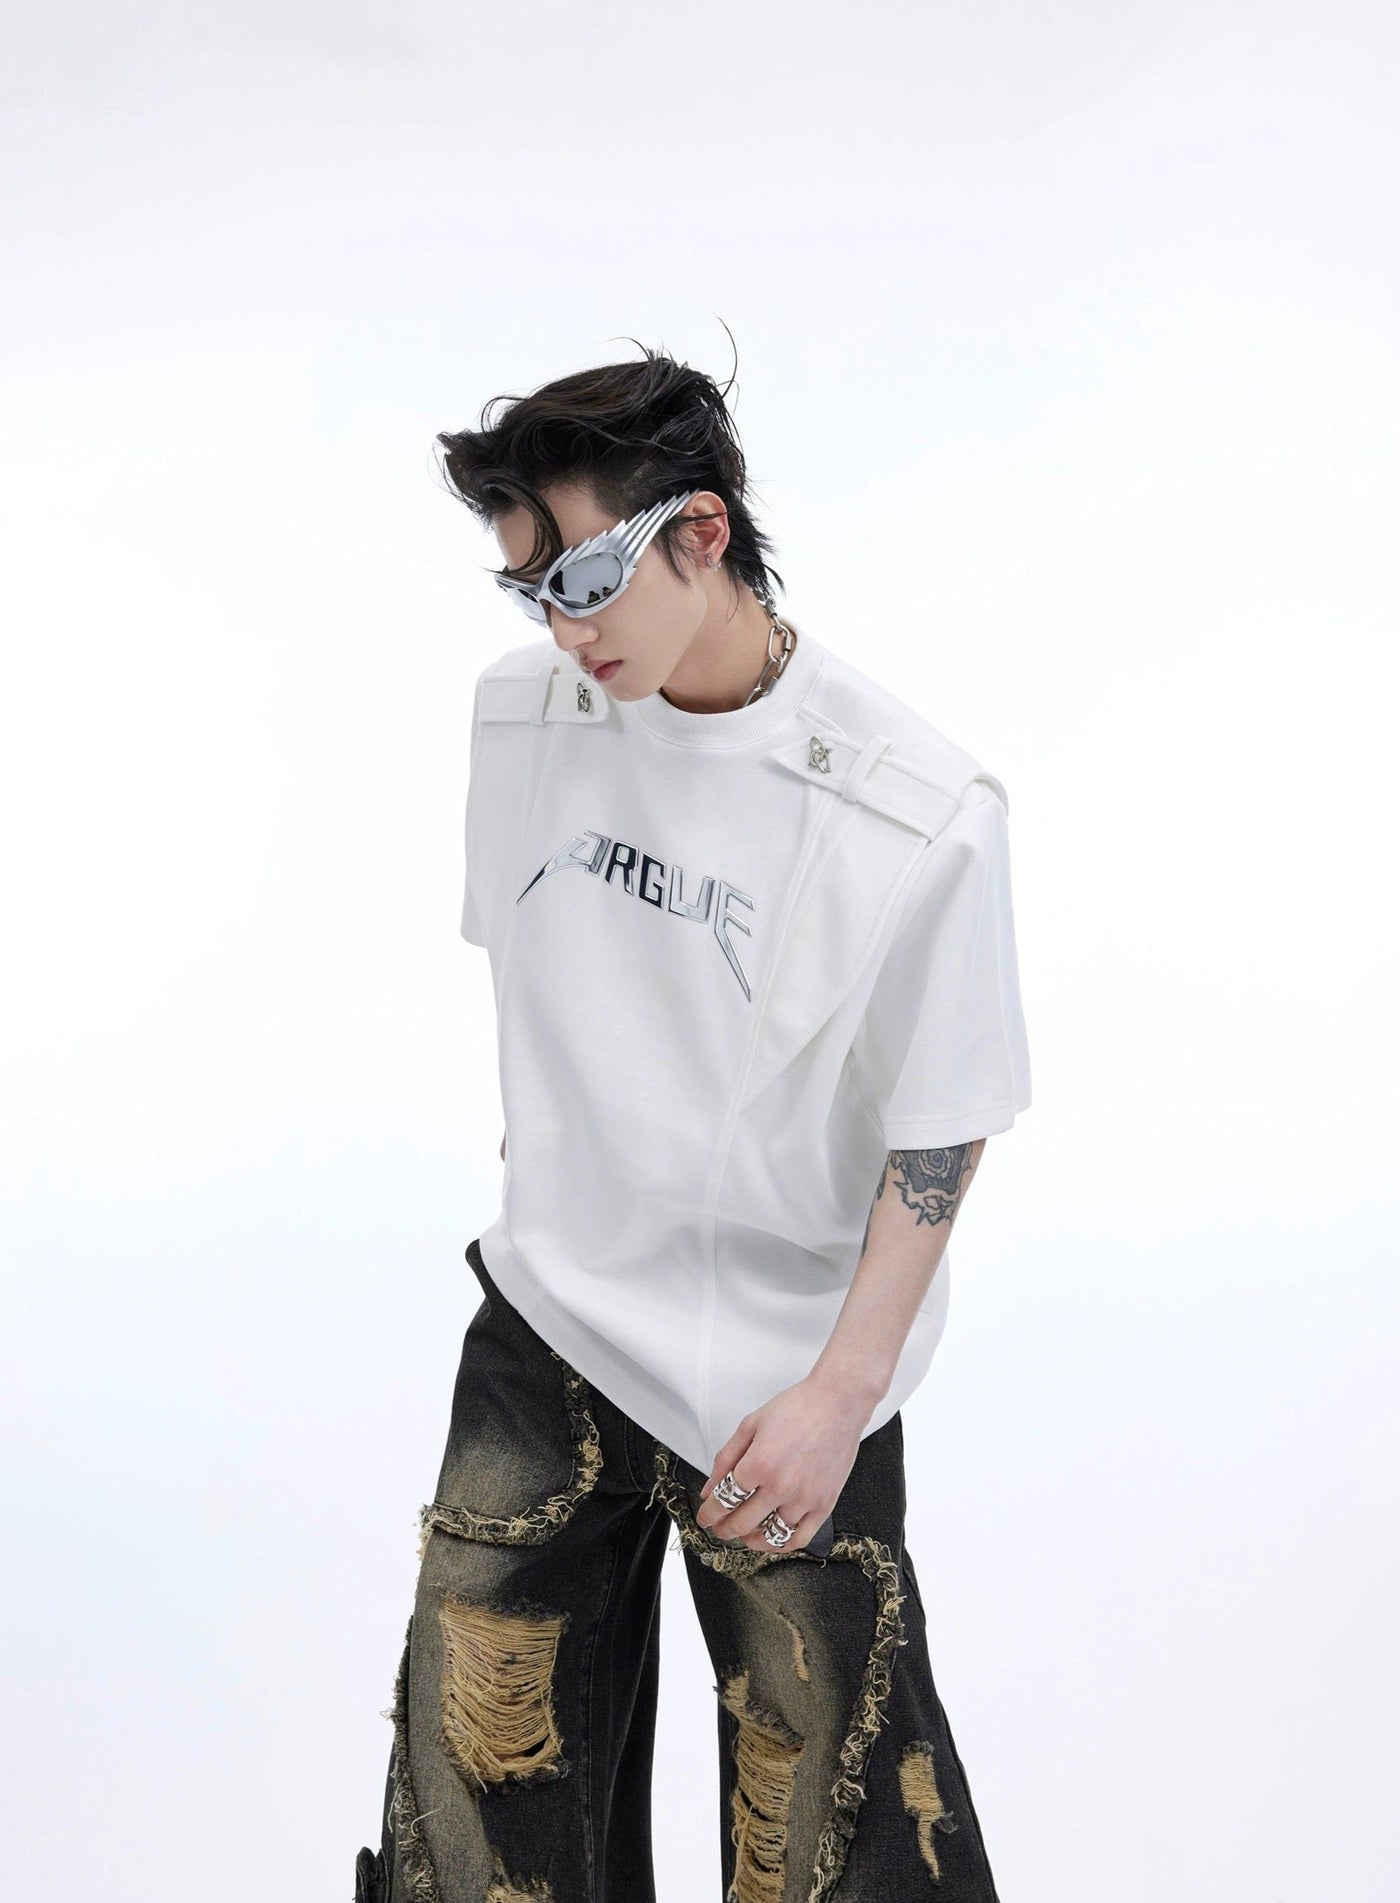 Shoulder Strap T-Shirt Korean Street Fashion T-Shirt By Argue Culture Shop Online at OH Vault